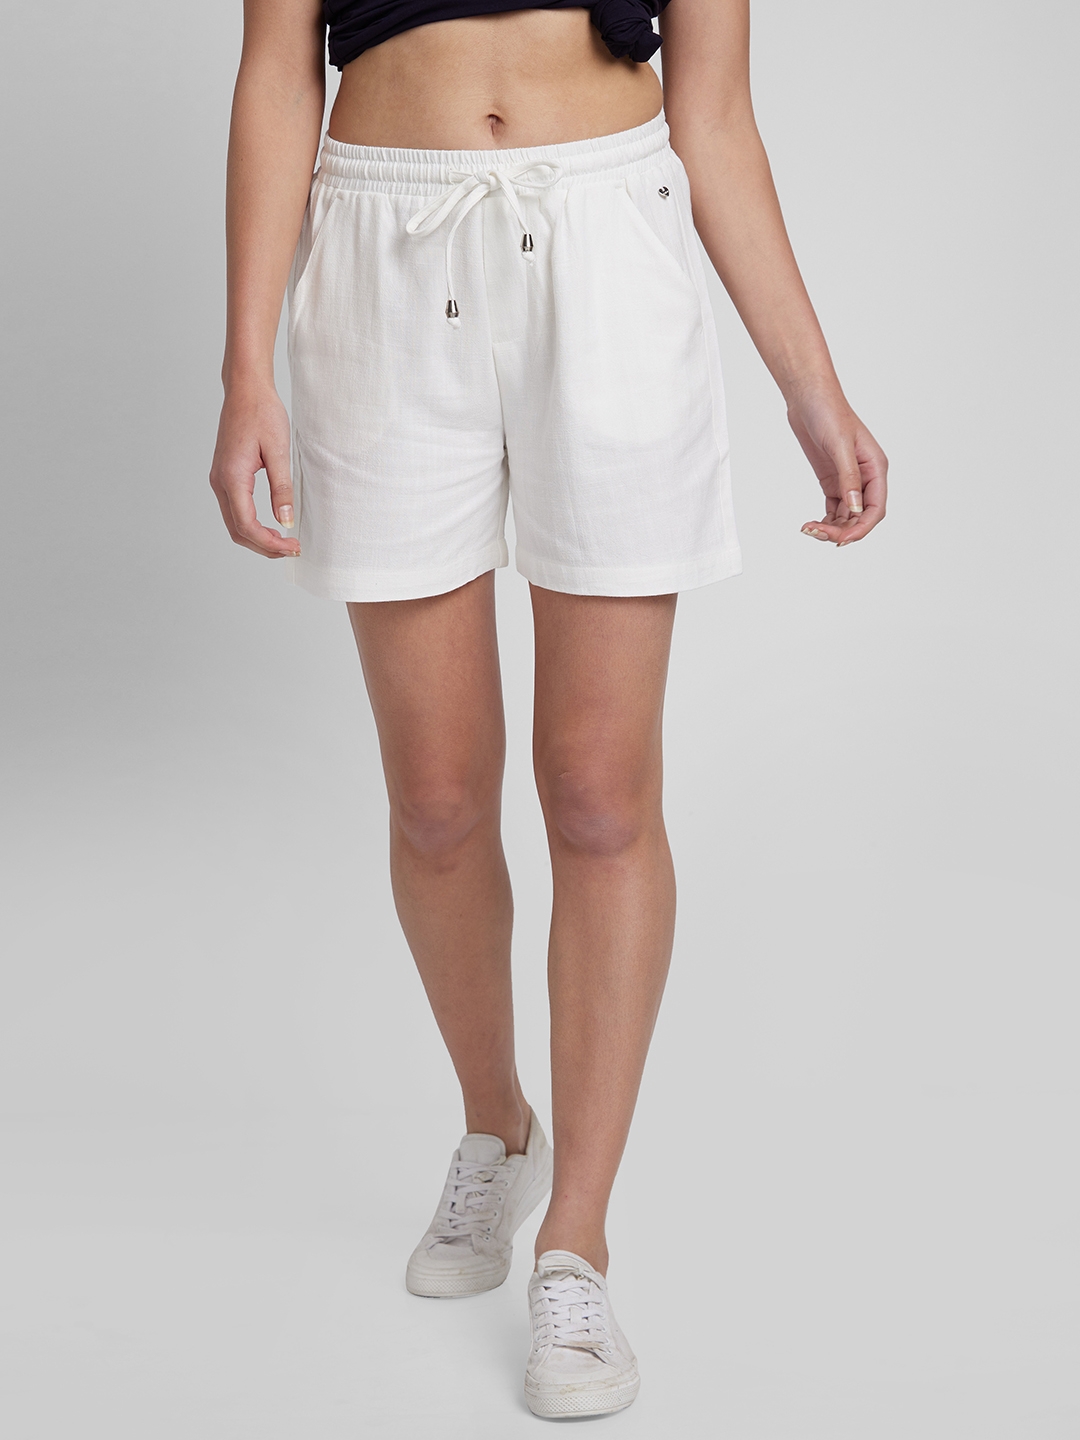 Women's White Cotton Blend Solid Shorts